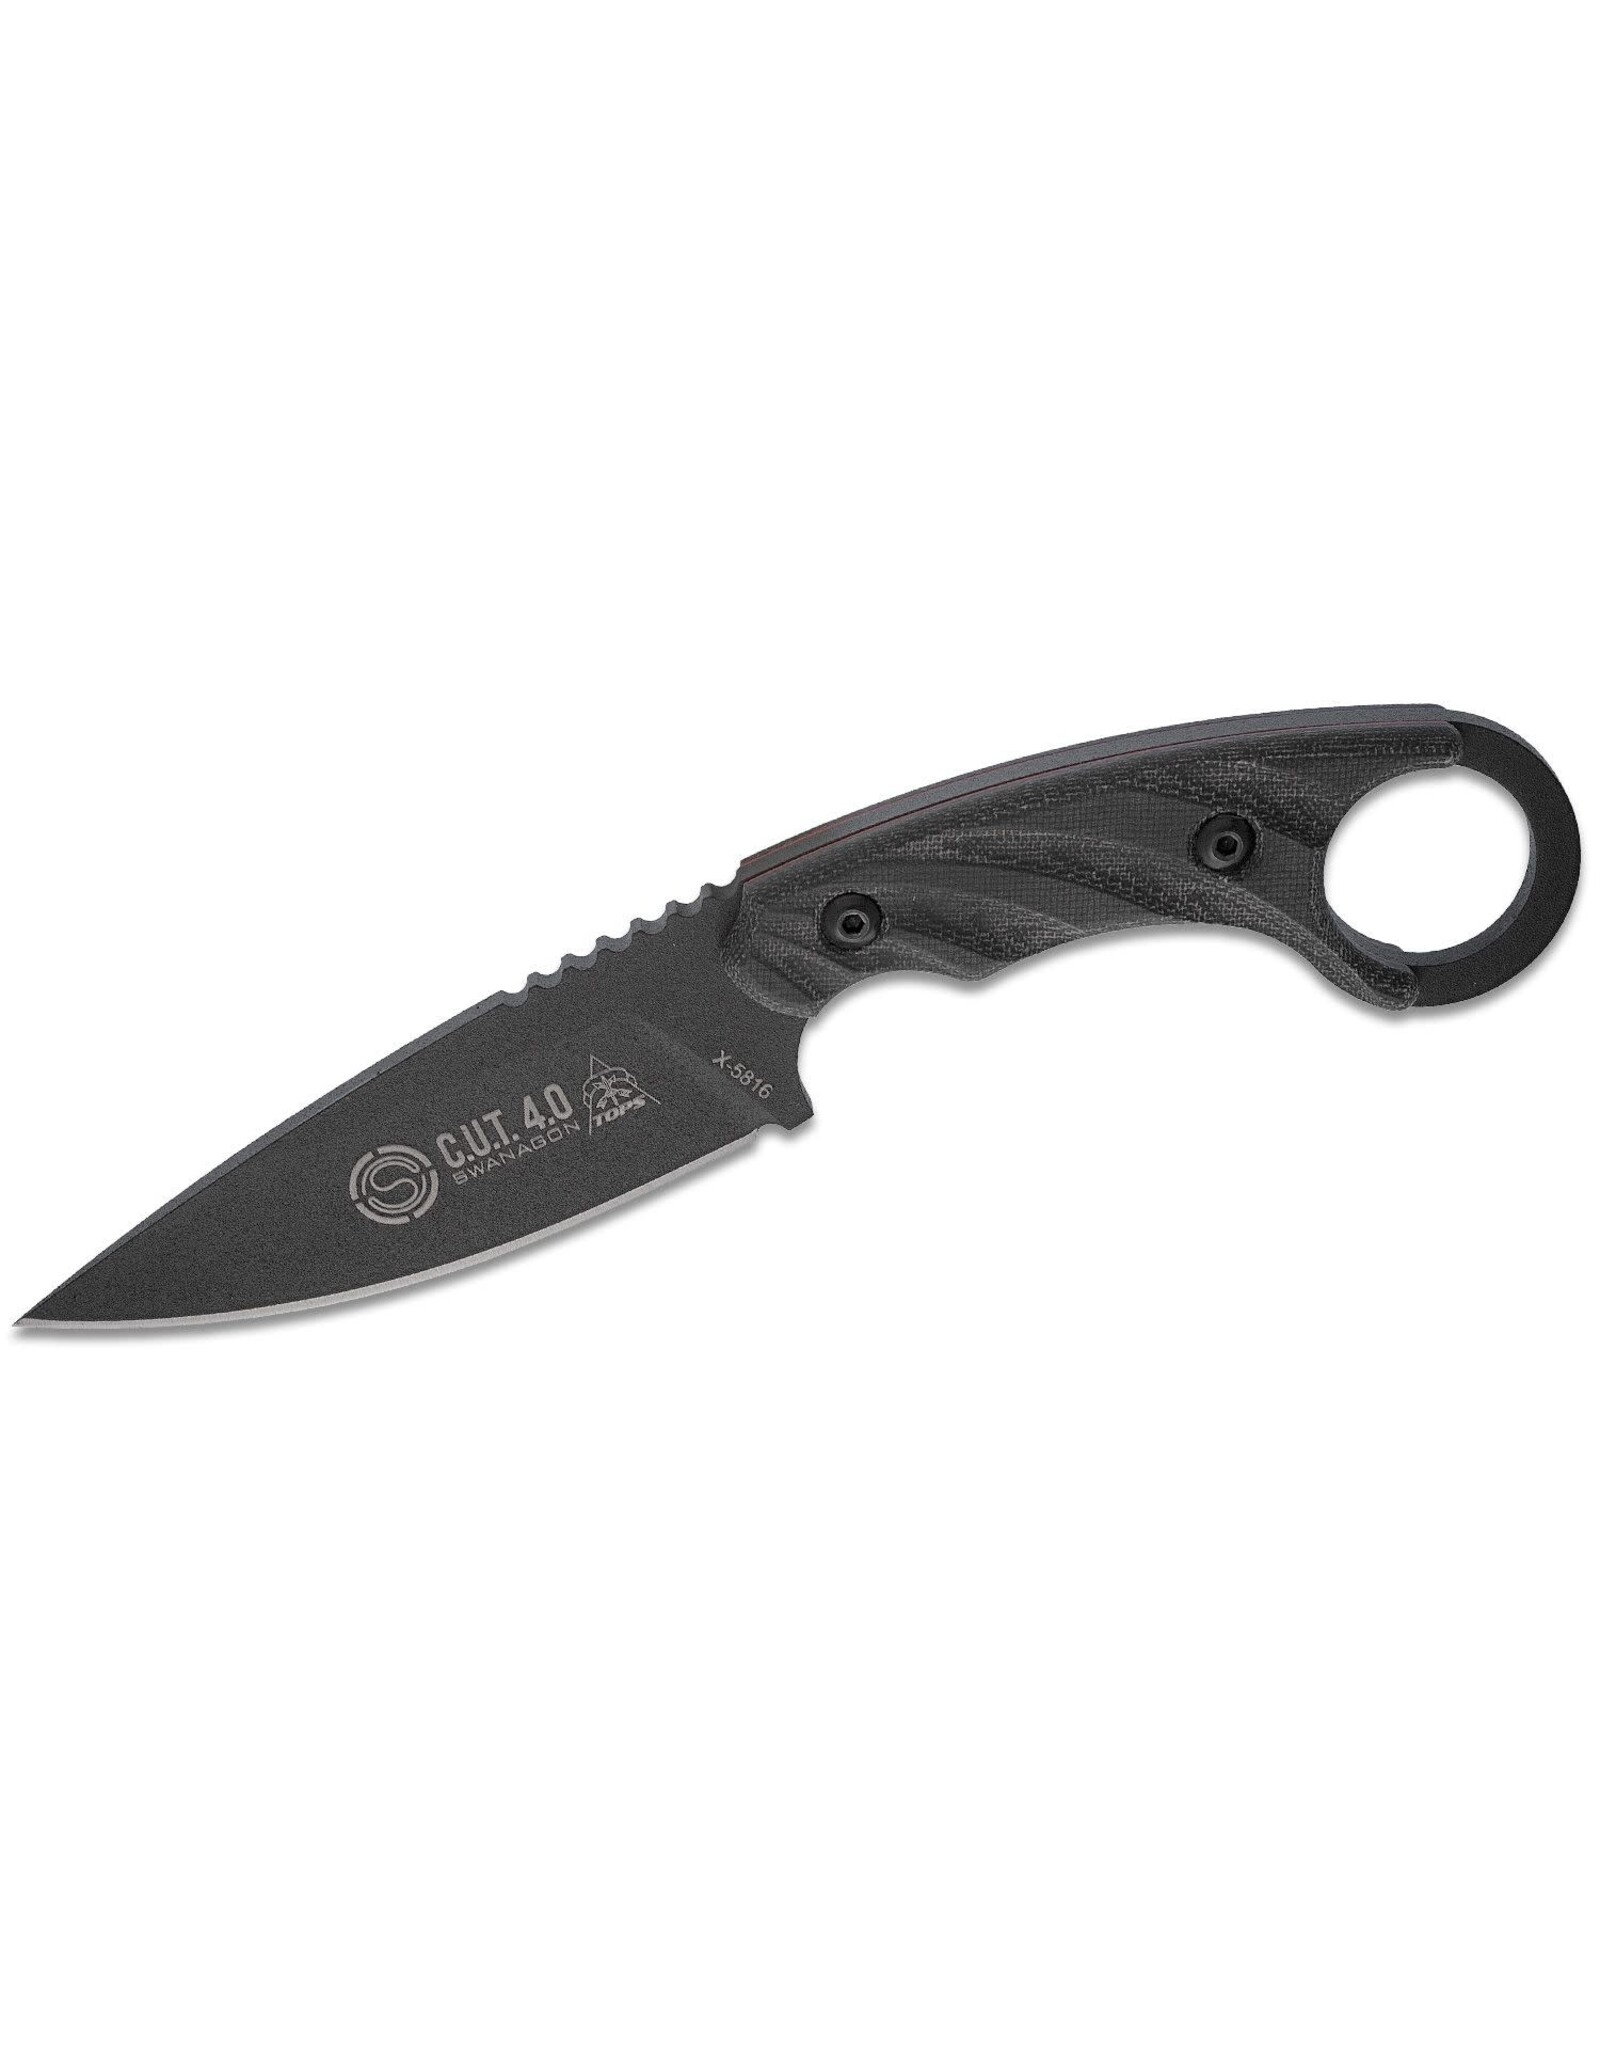 Tops TOPS Knives C.U.T. 4.0 Blackout Edition Fixed 4.25" Black Carbon Steel Blade and Canvas Micarta Handles, Kydex Sheath - CUT-40A